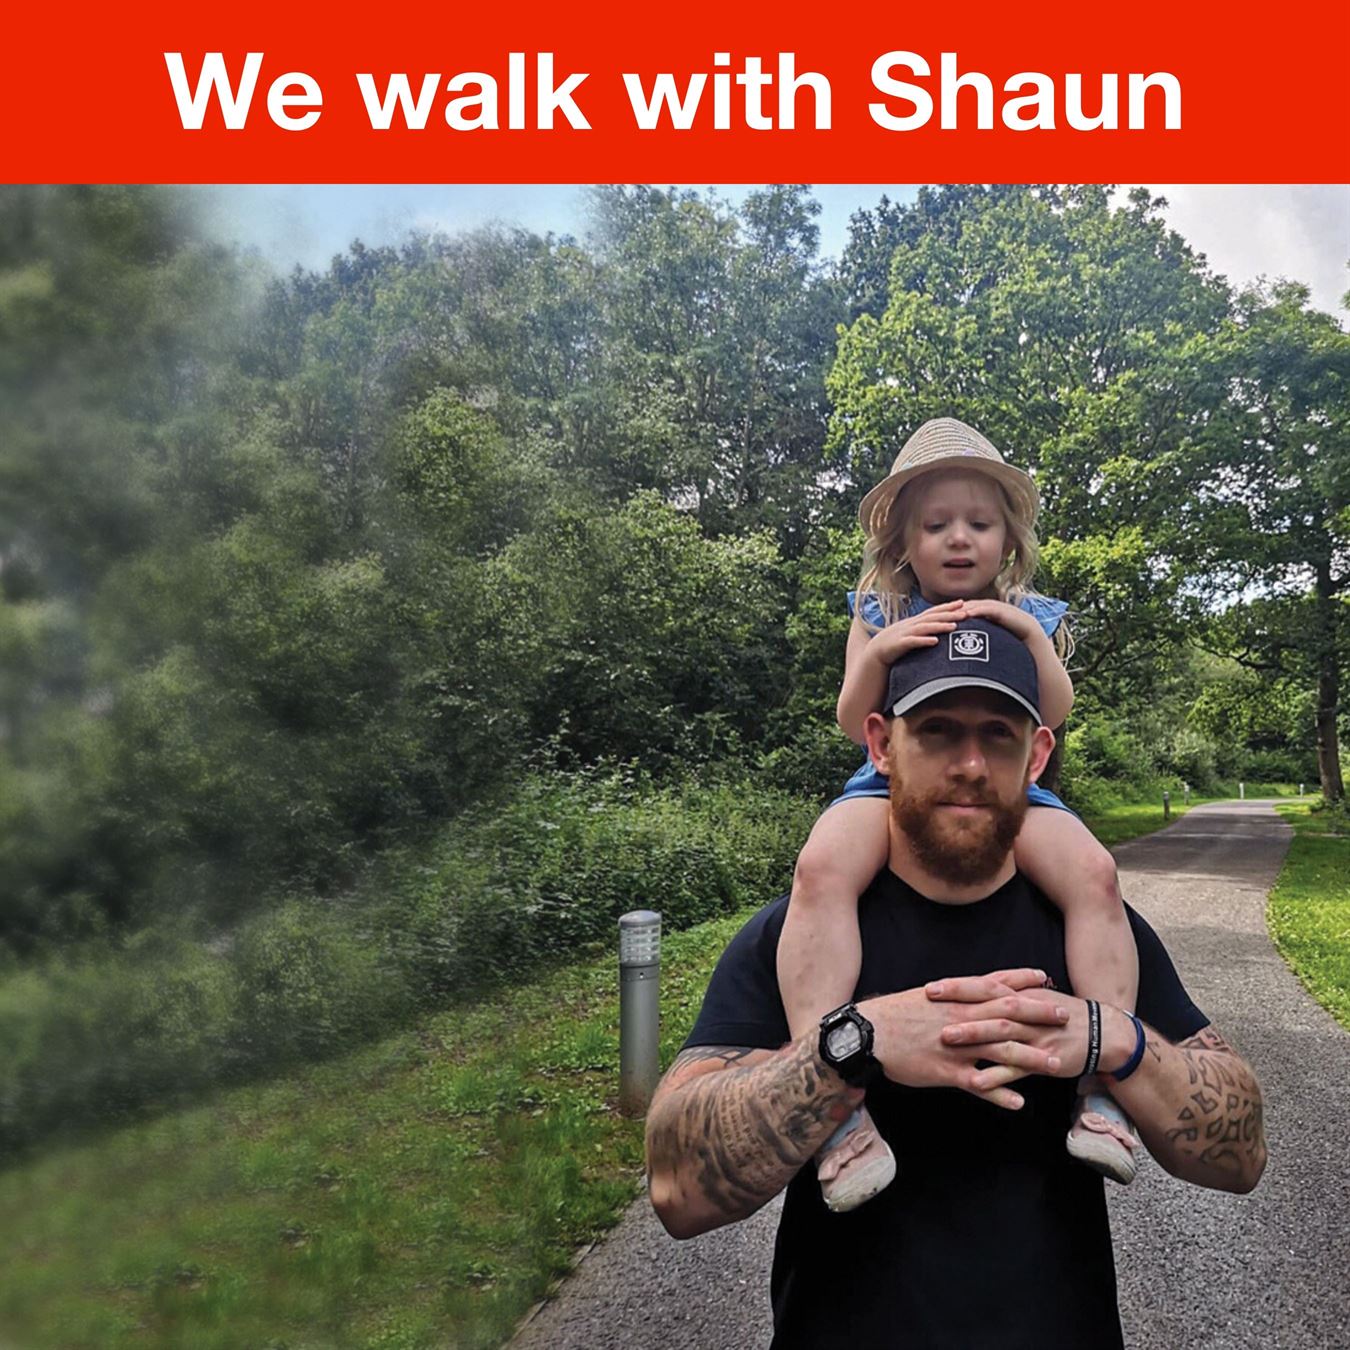 We walk with Shaun  - We walk with Shaun 